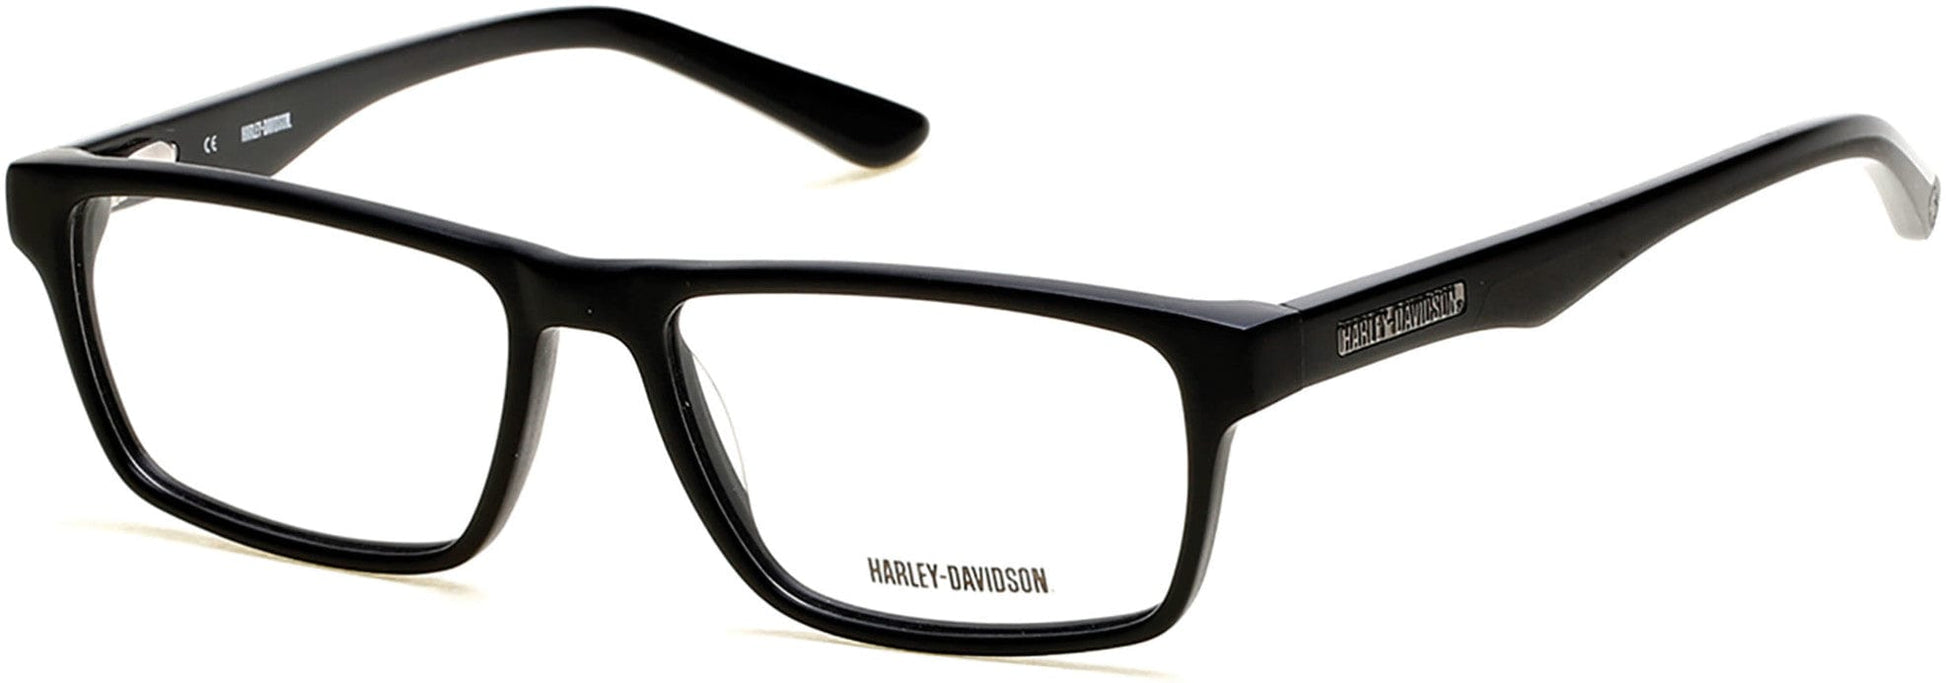 Harley-Davidson HD0727 Eyeglasses 002-002 - Matte Black